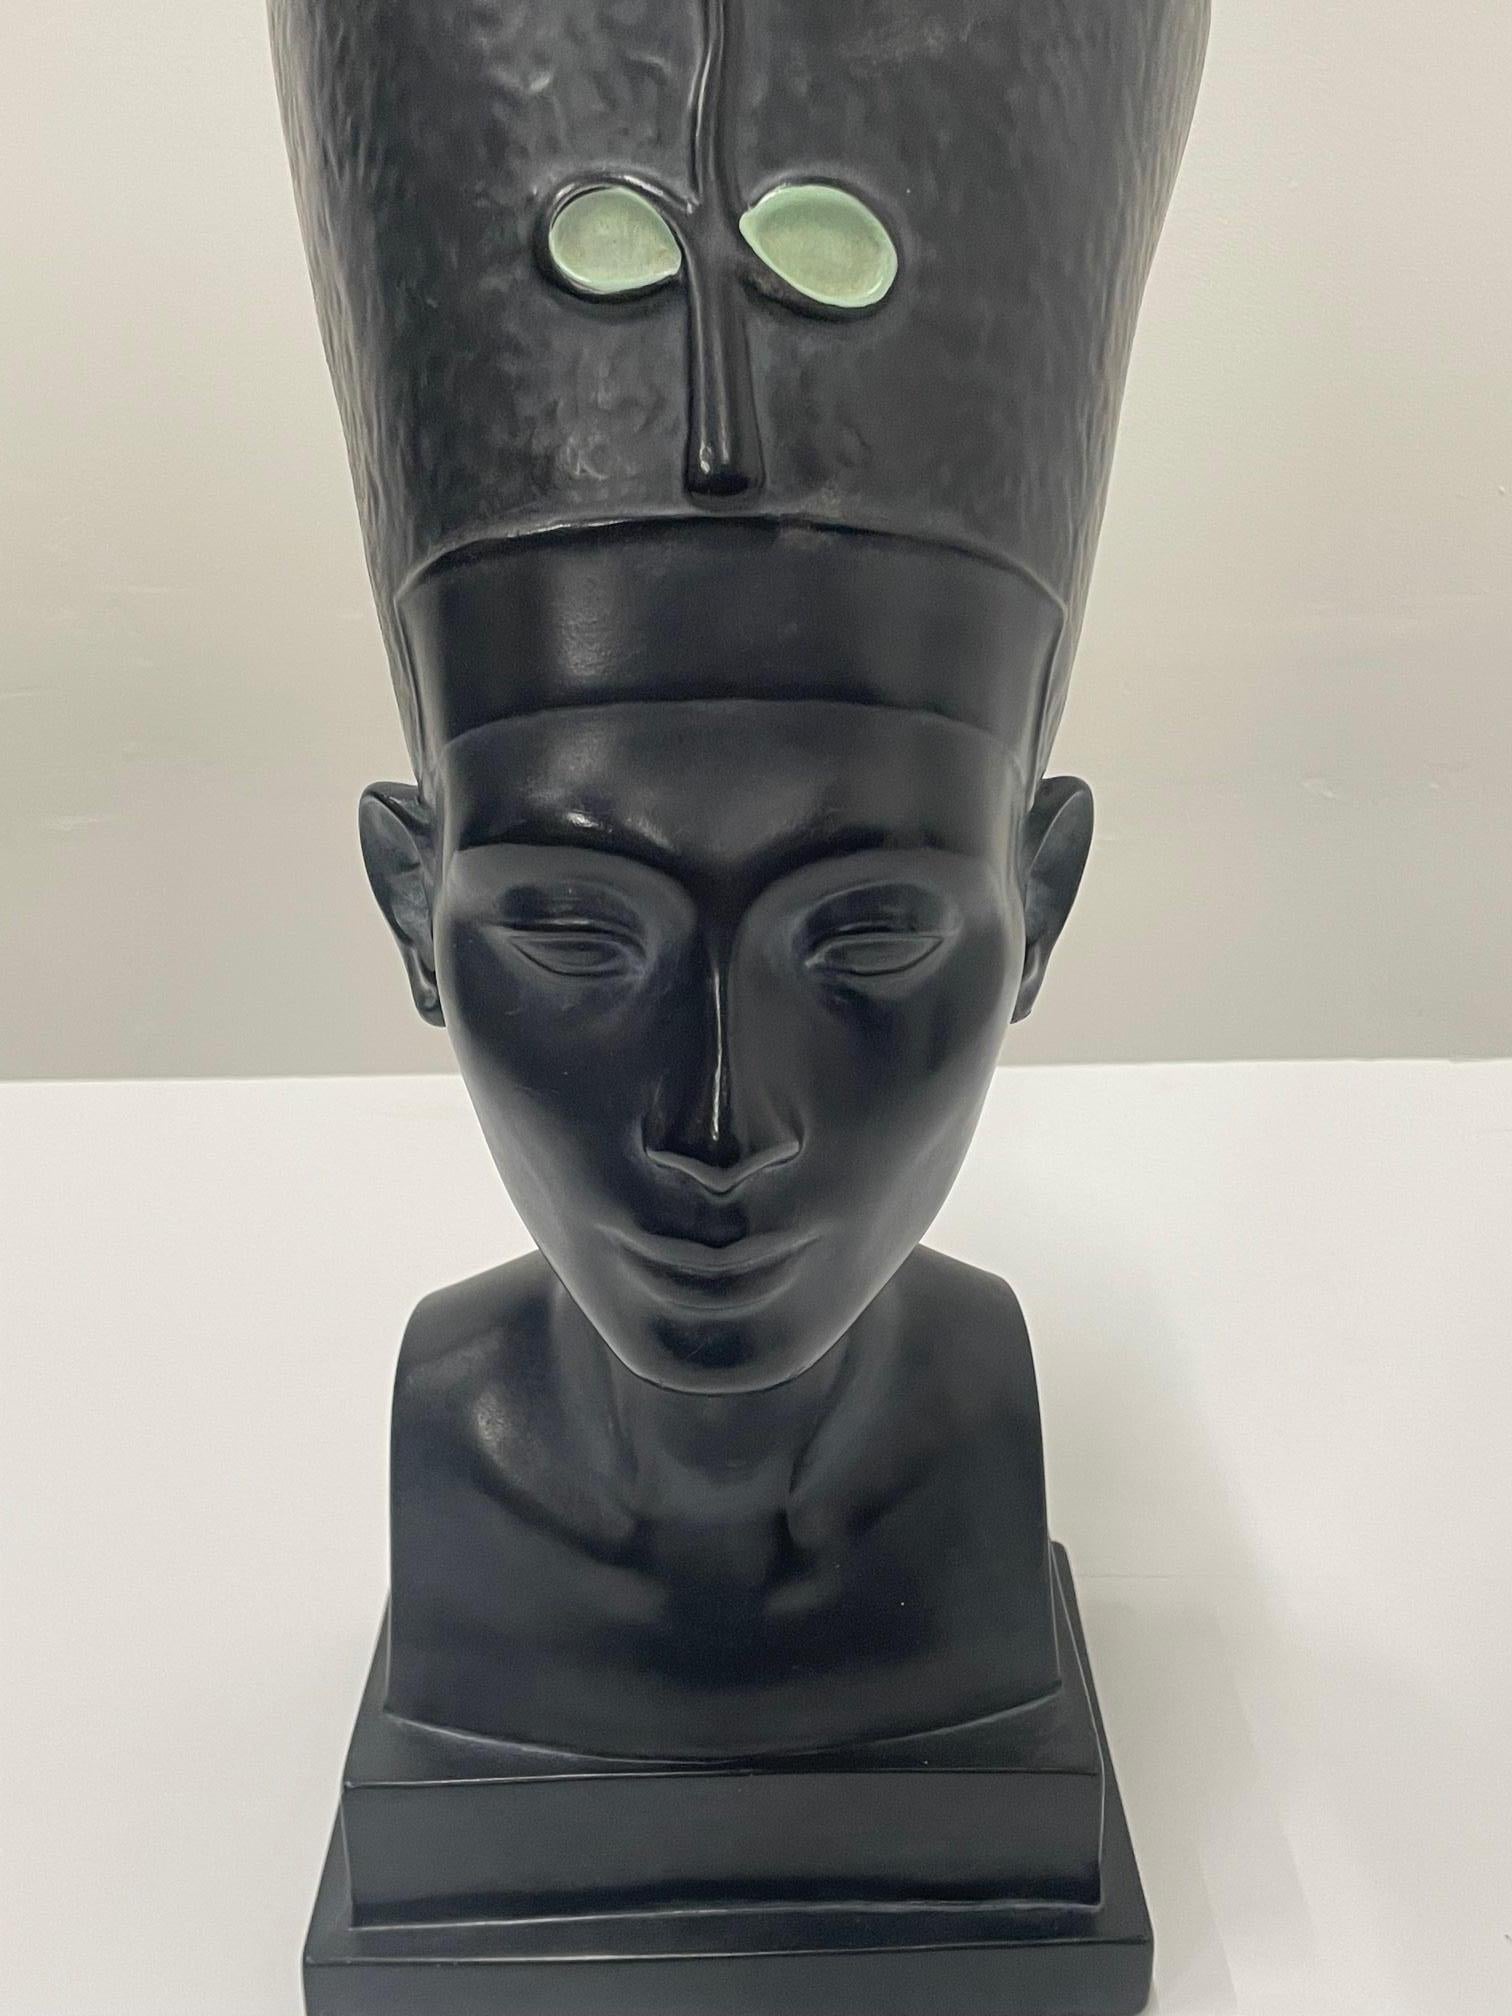 A sculptural black ebonized bust of Nefertiti has a striking moody prescence.